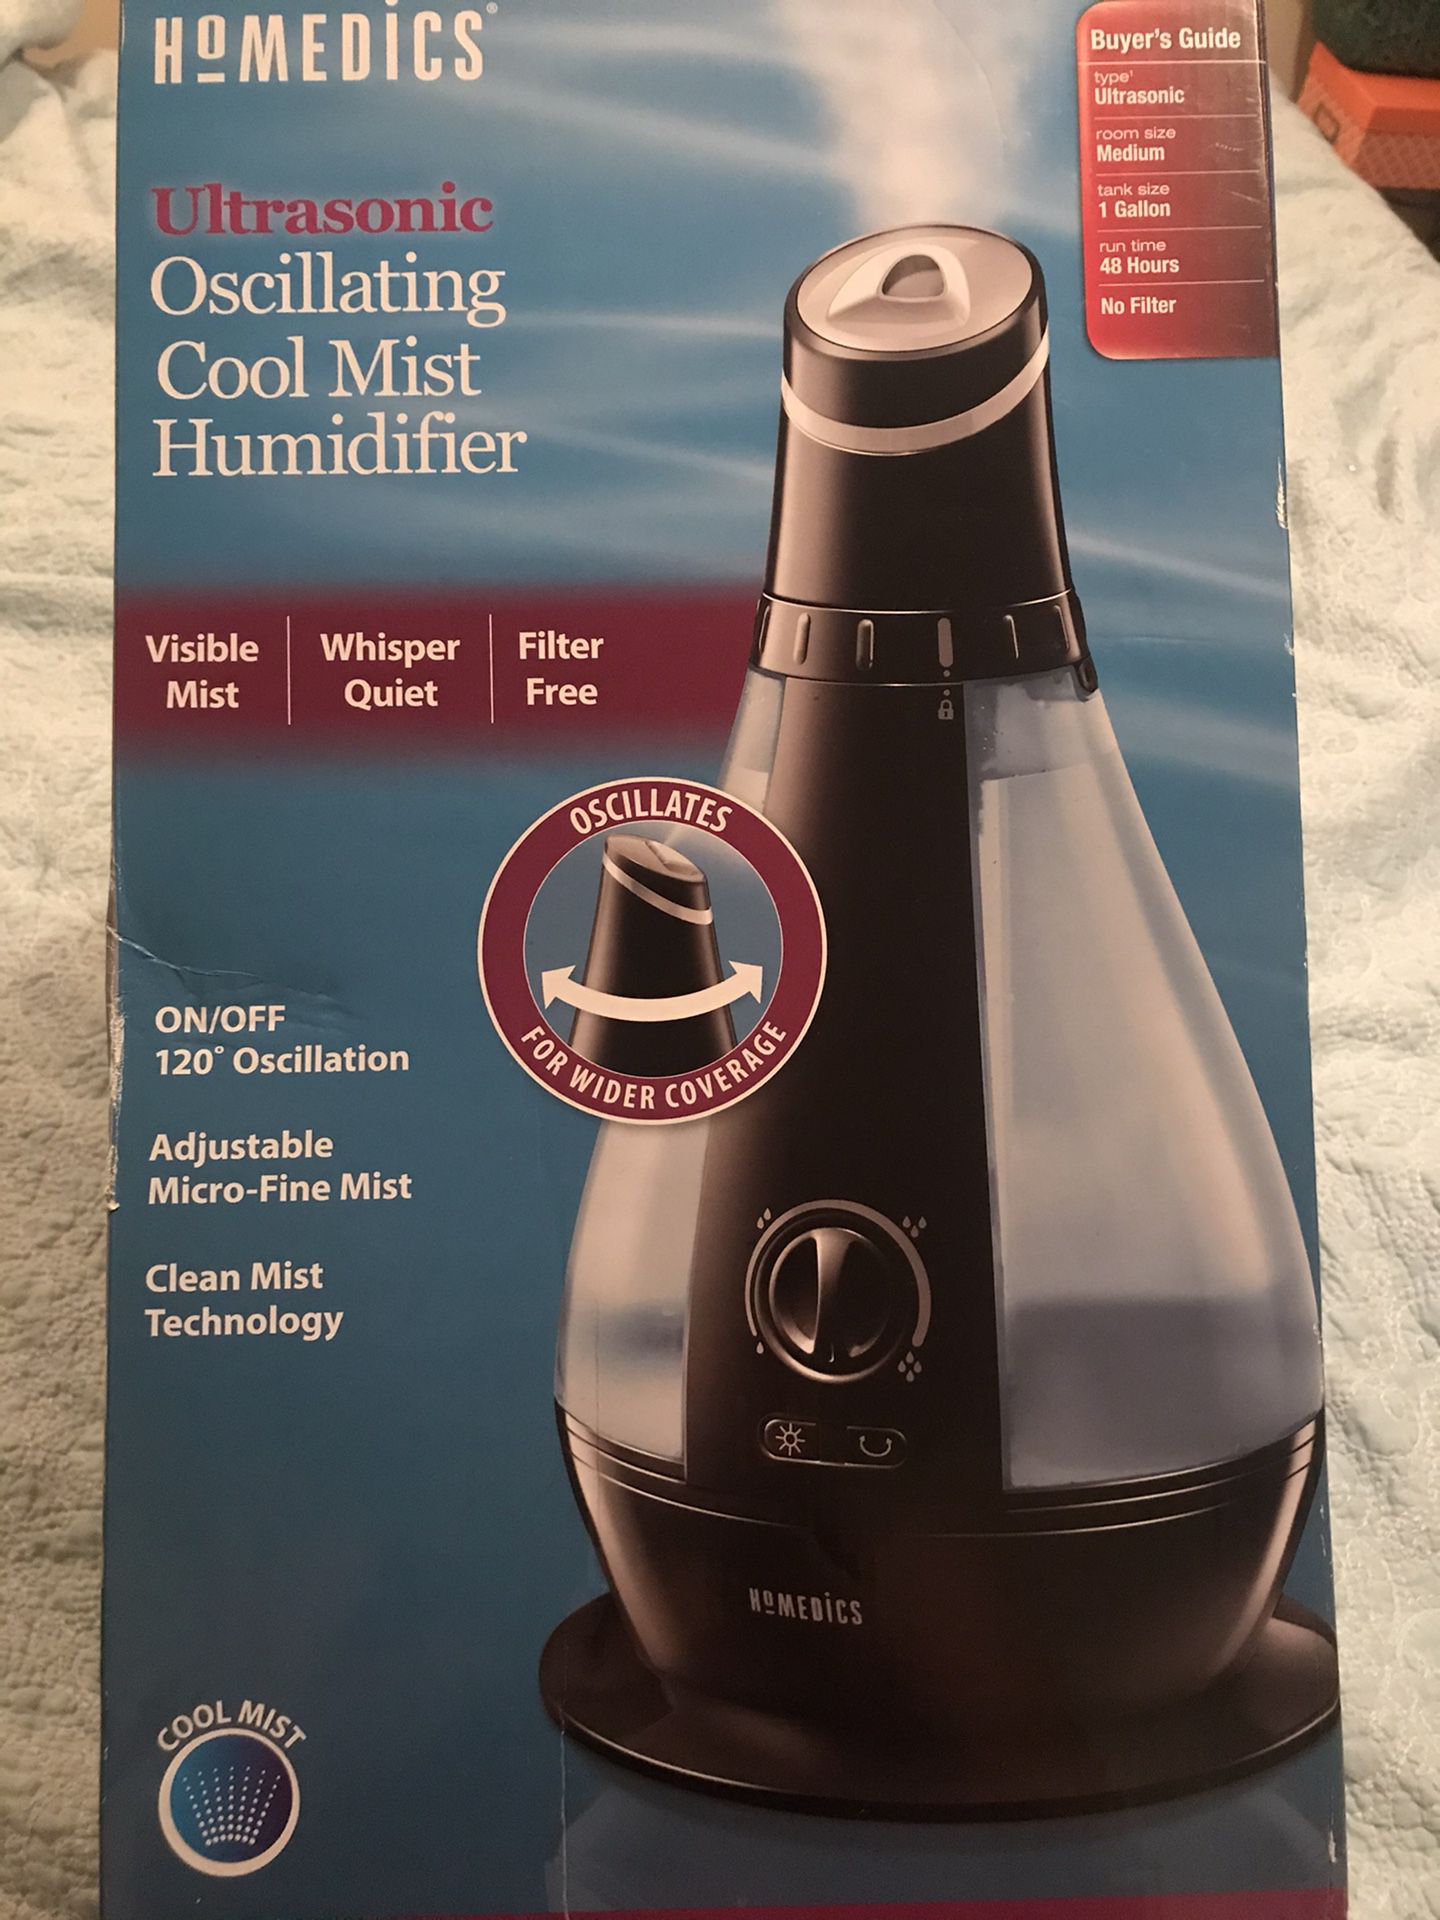 Homedics- Ultrasonic Oscillating Cool Mist Humidifier- New in box